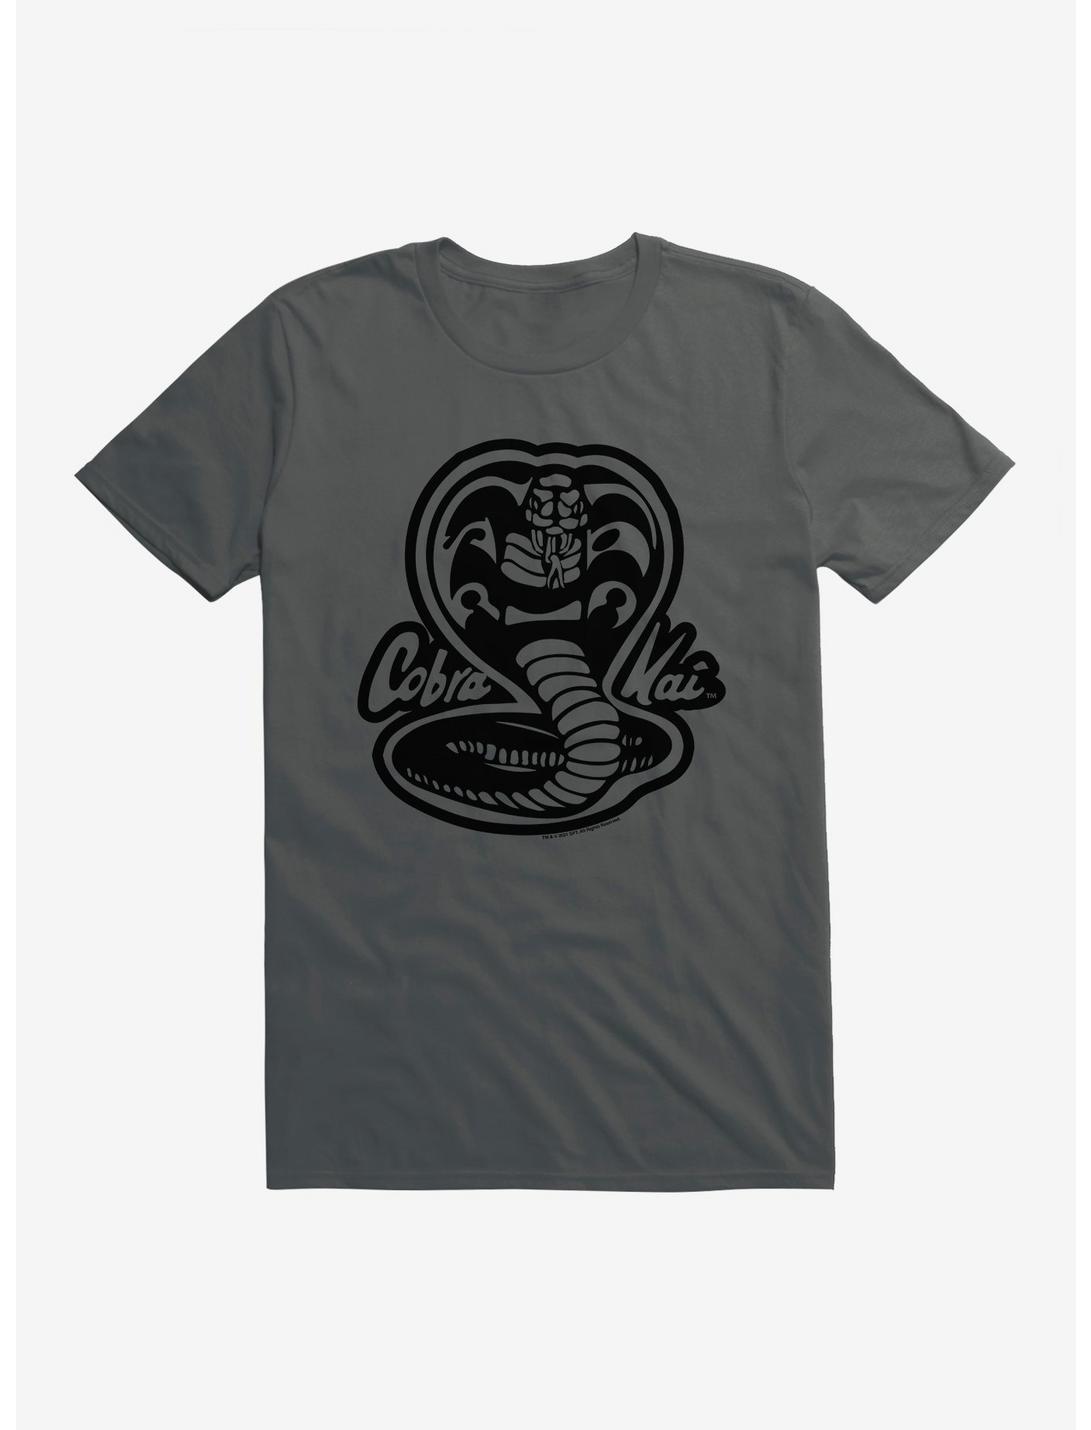 Cobra Kai Black And White Logo T-Shirt, CHARCOAL, hi-res